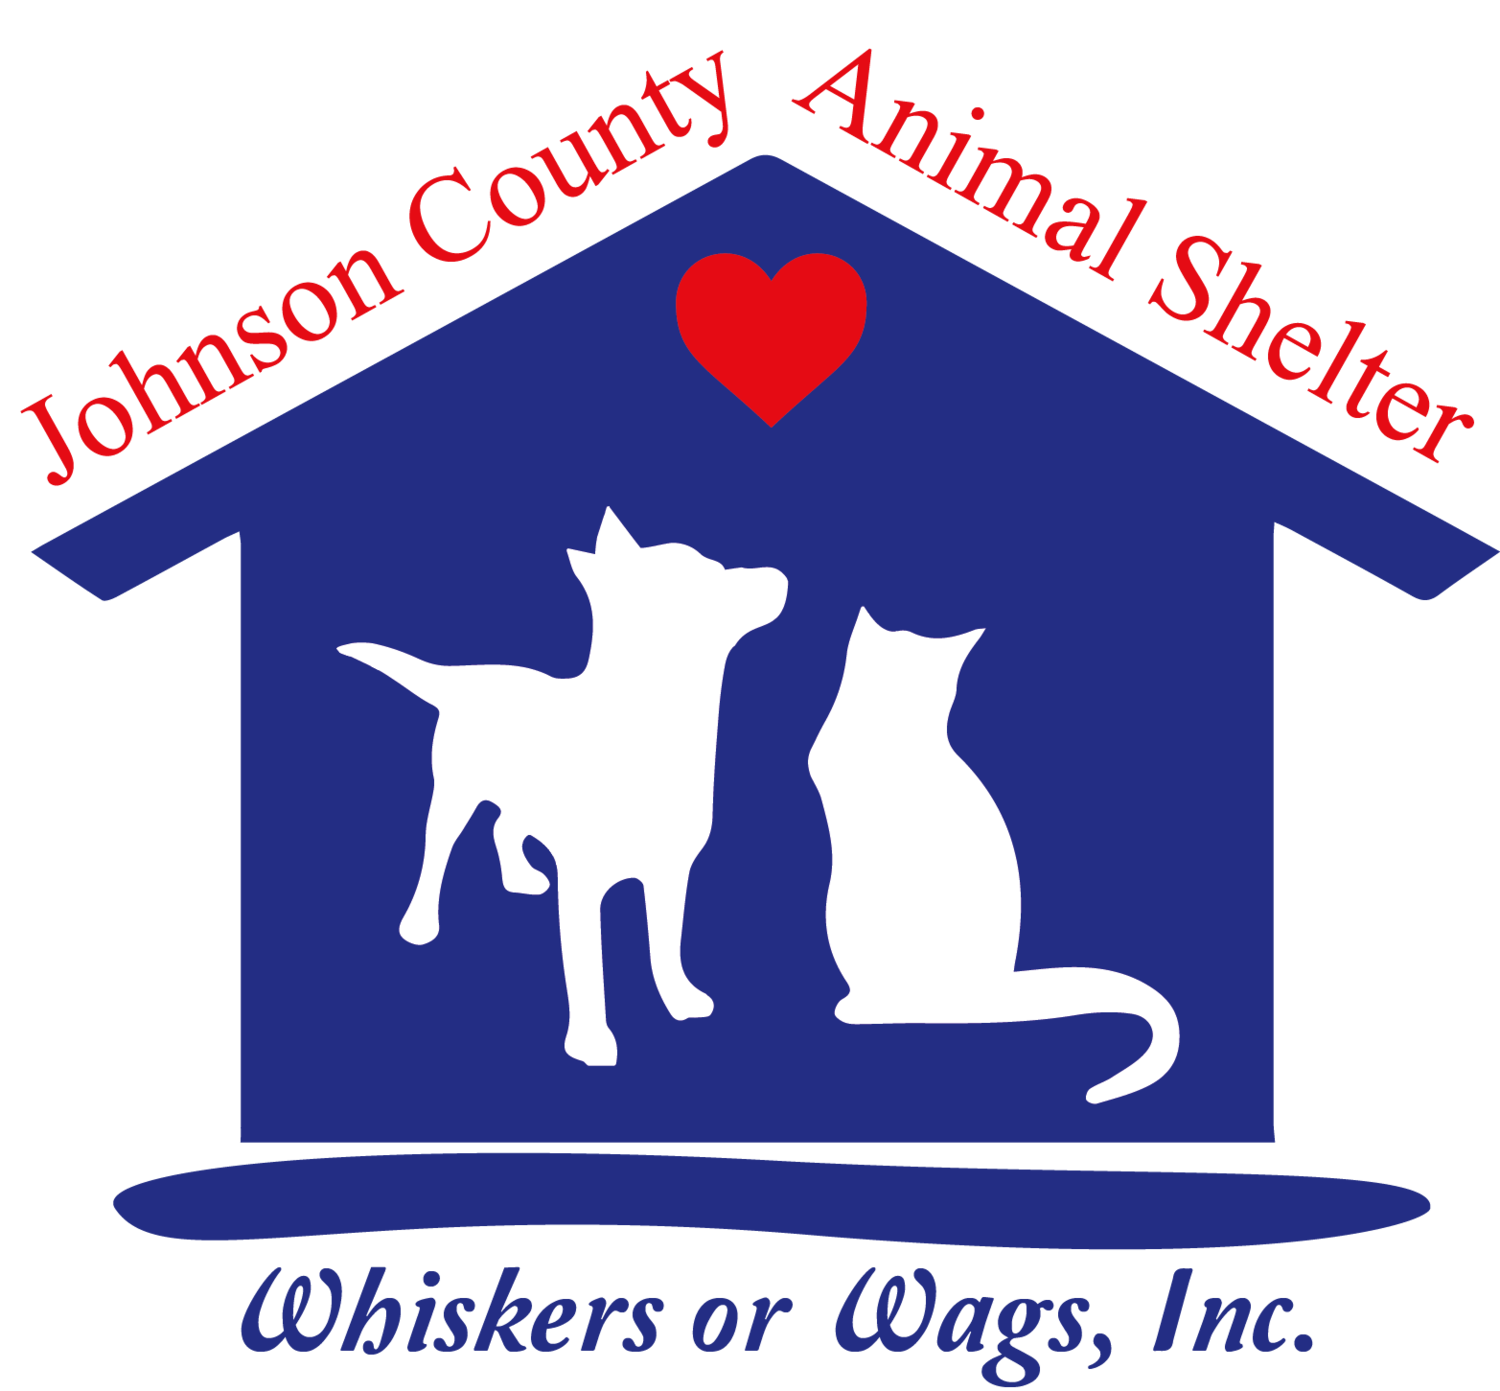 Johnson County Animal Shelter